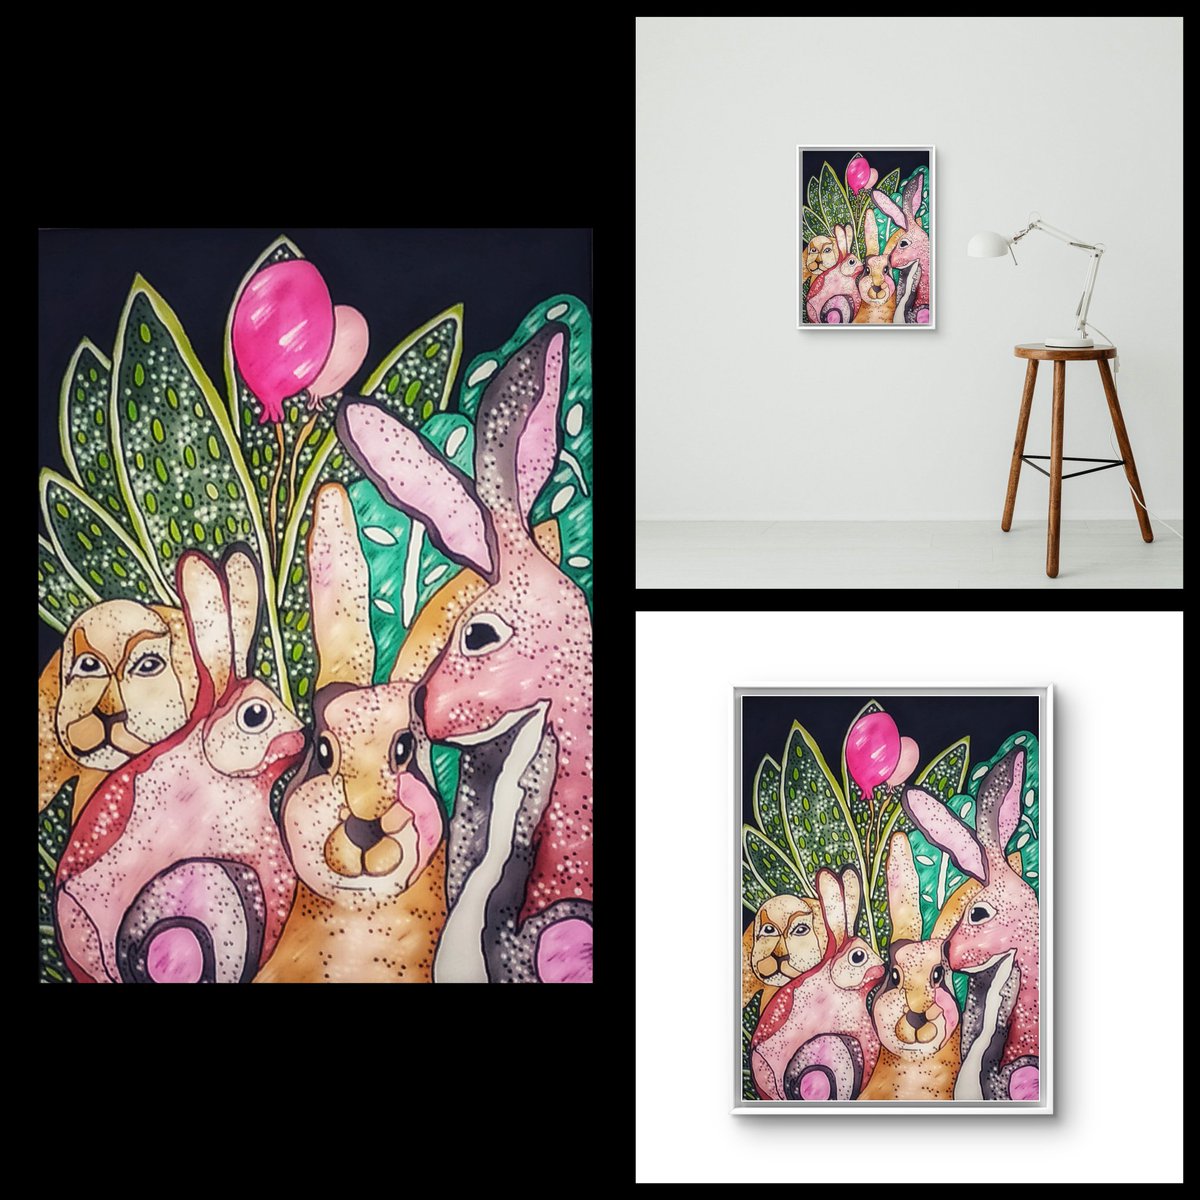 IL GIOCO DEI CONIGLI 
ArGallery# modernart# artemoderna# pittura# pitturafigurativa# colorpainting# Homeart# Artdecor# Artexibitions# Painting# Conigli# Rabbits# Painted rabbits# Artwork#
instagram.com/p/C50xnZkNB3n/…